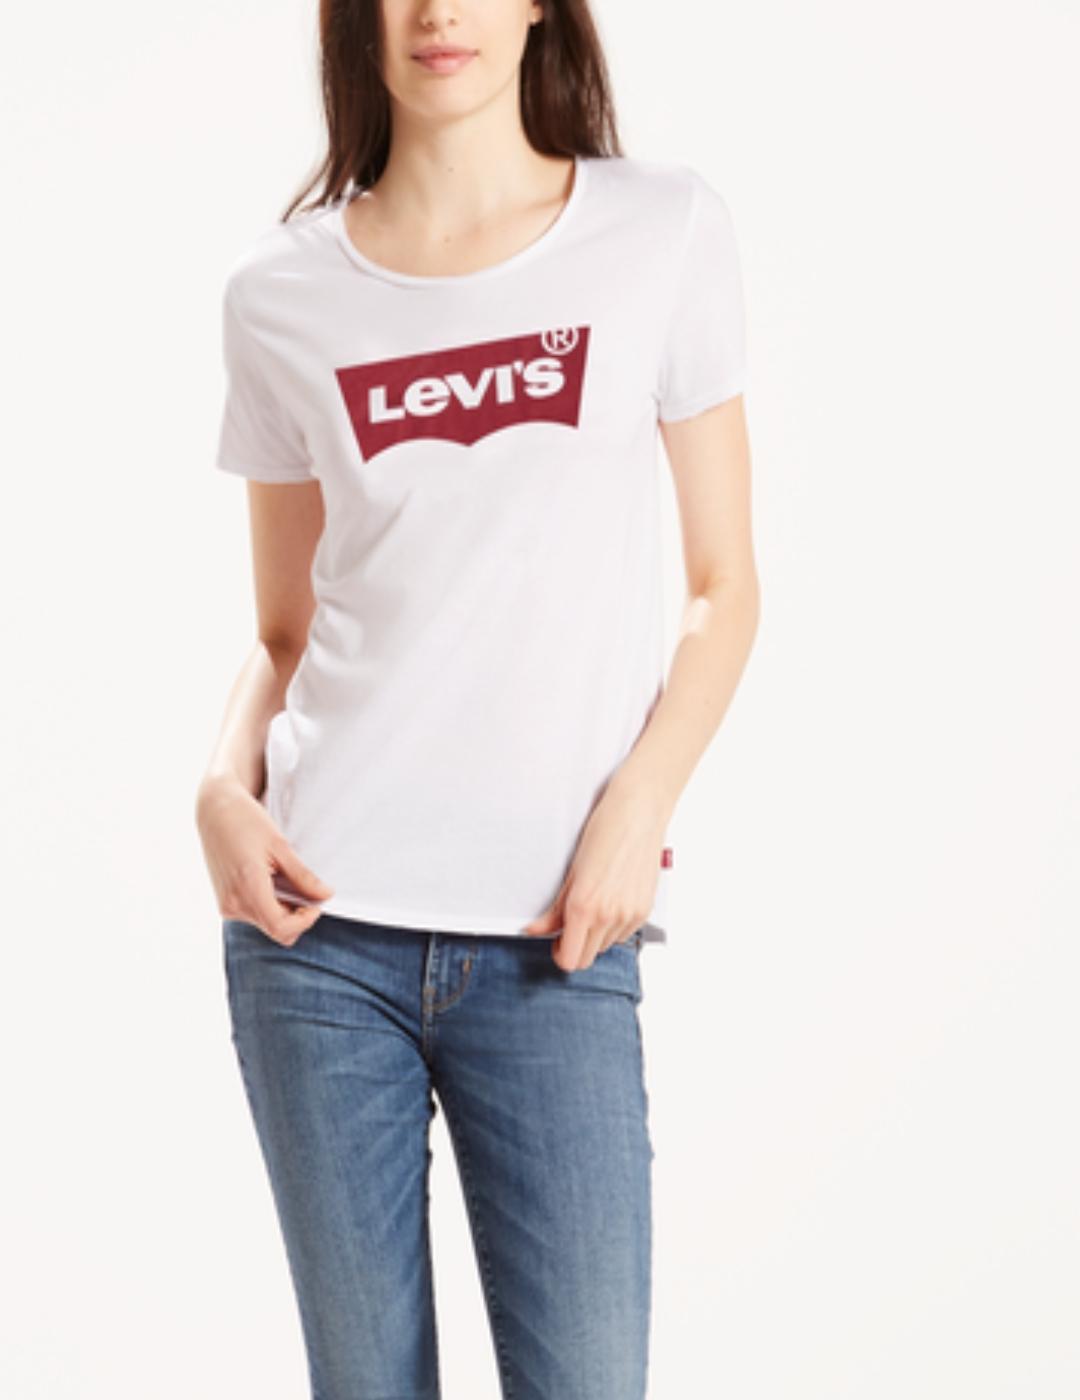 lista Eficacia estudio Camiseta levis logo blanca manga corta mujer-